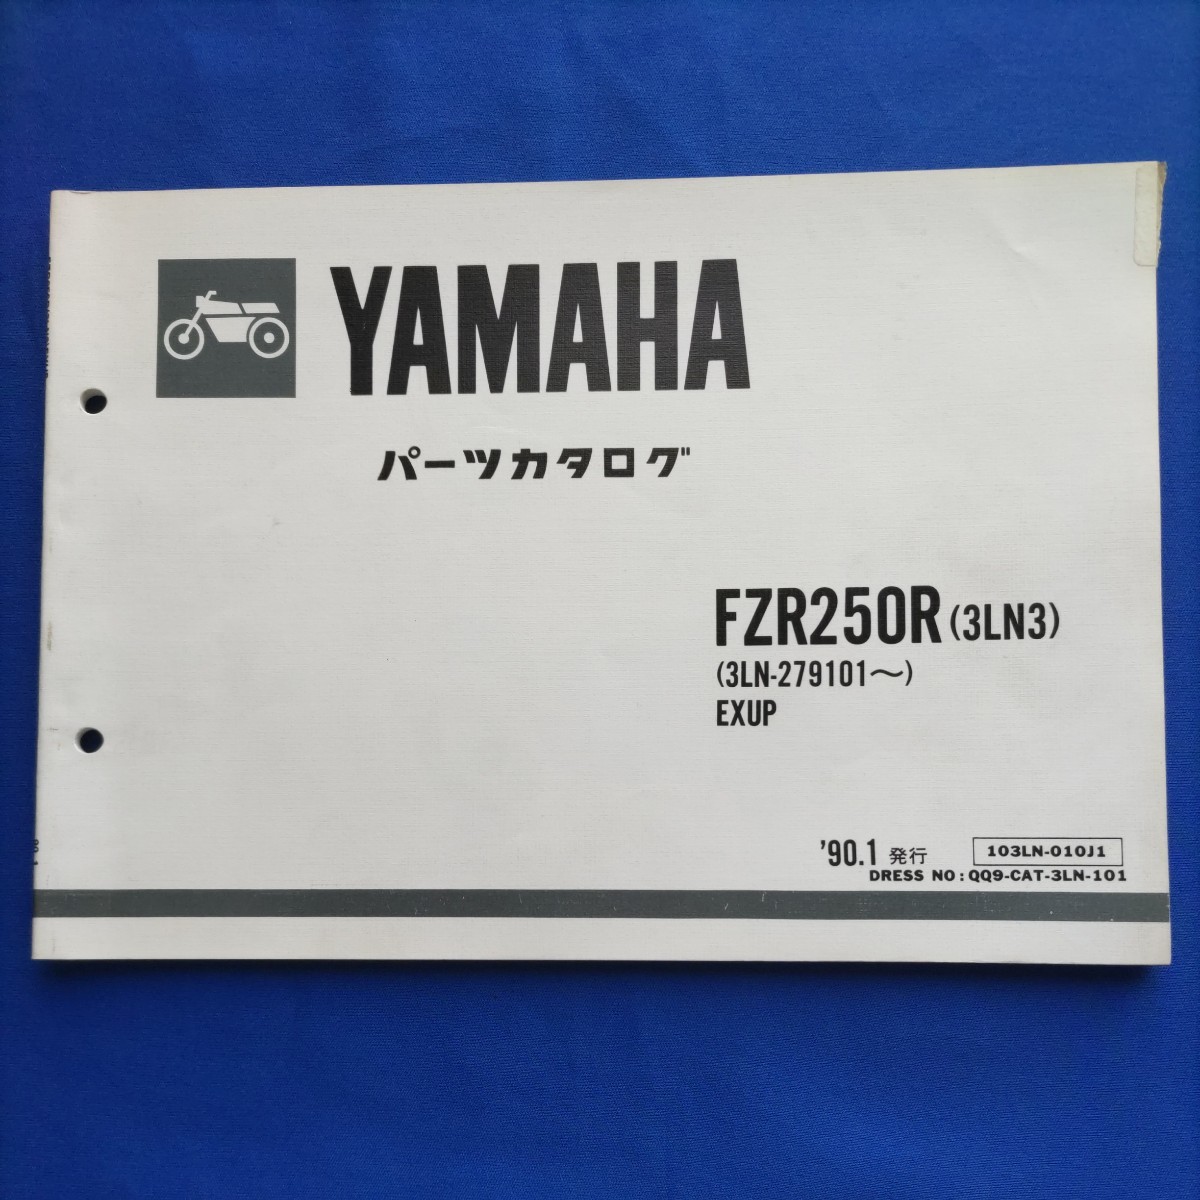 YAMAHA パーツカタログ FZR250R(3LN3)_画像1